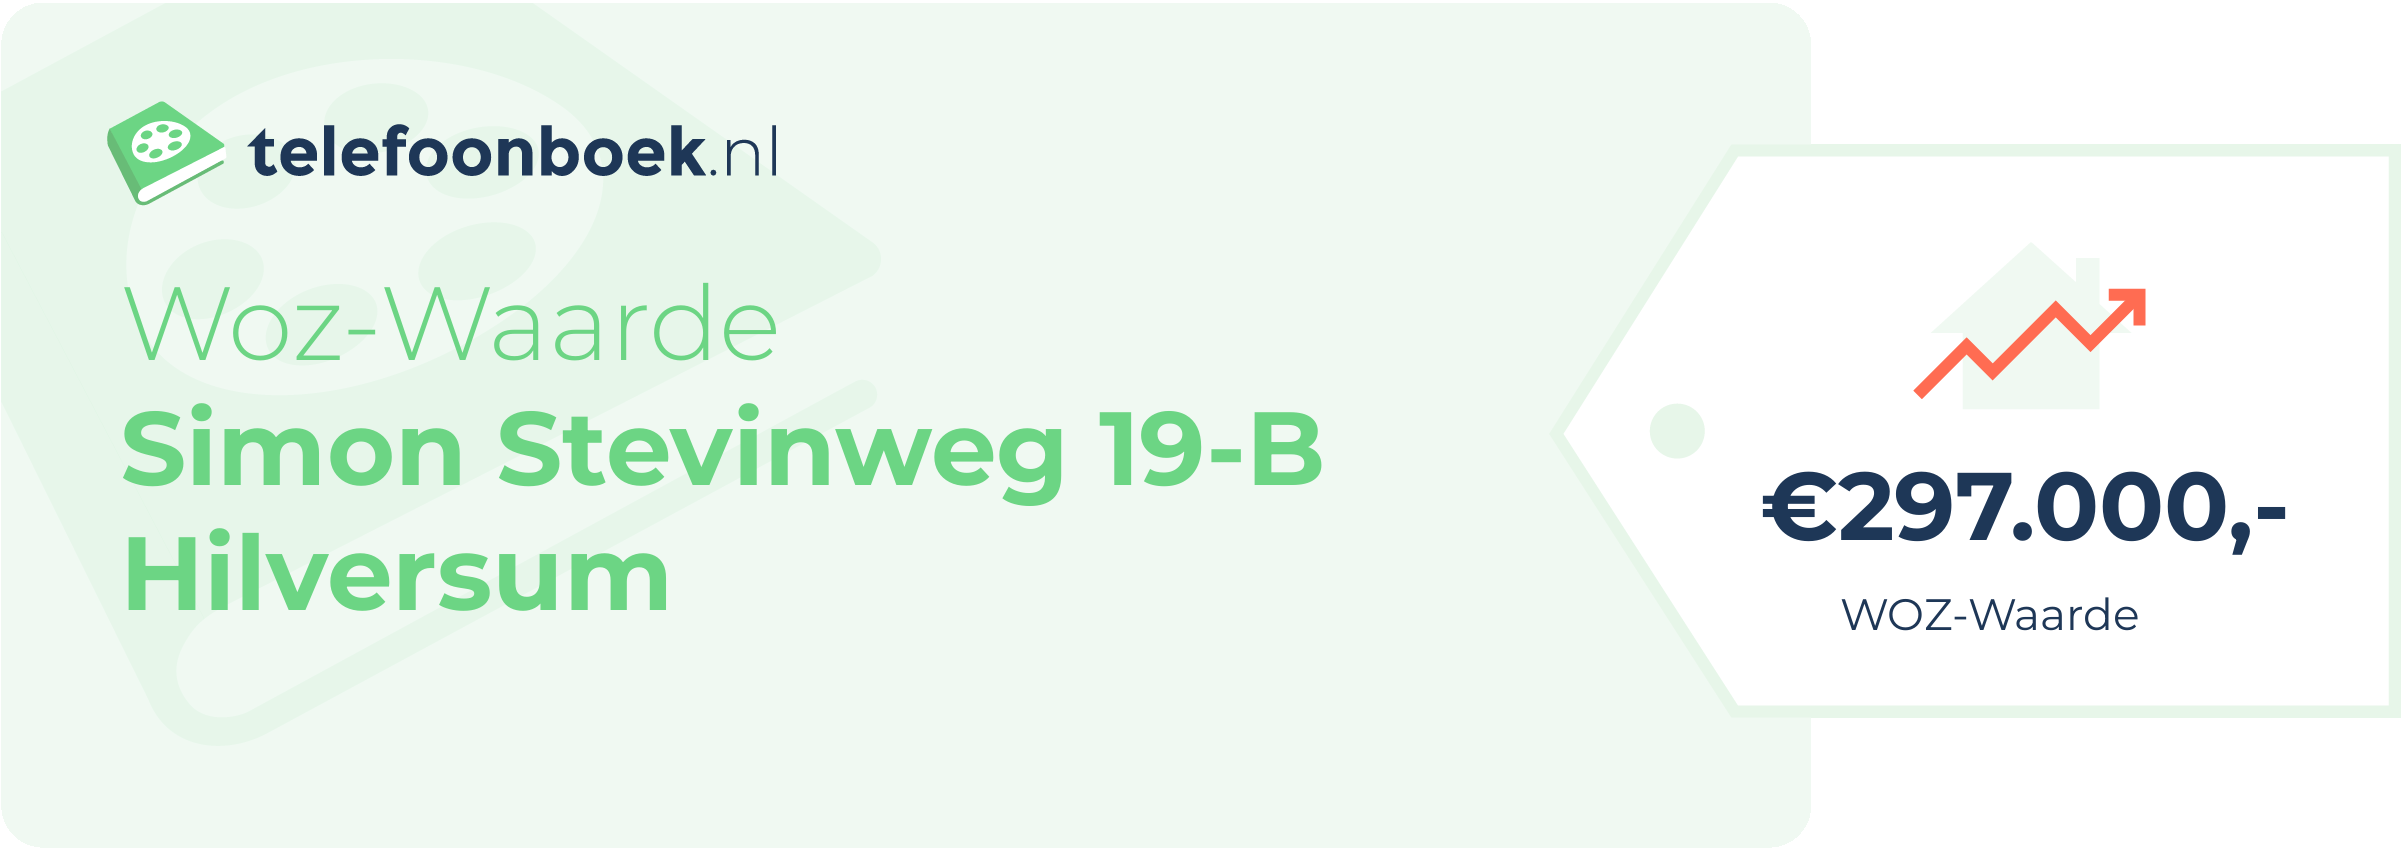 WOZ-waarde Simon Stevinweg 19-B Hilversum